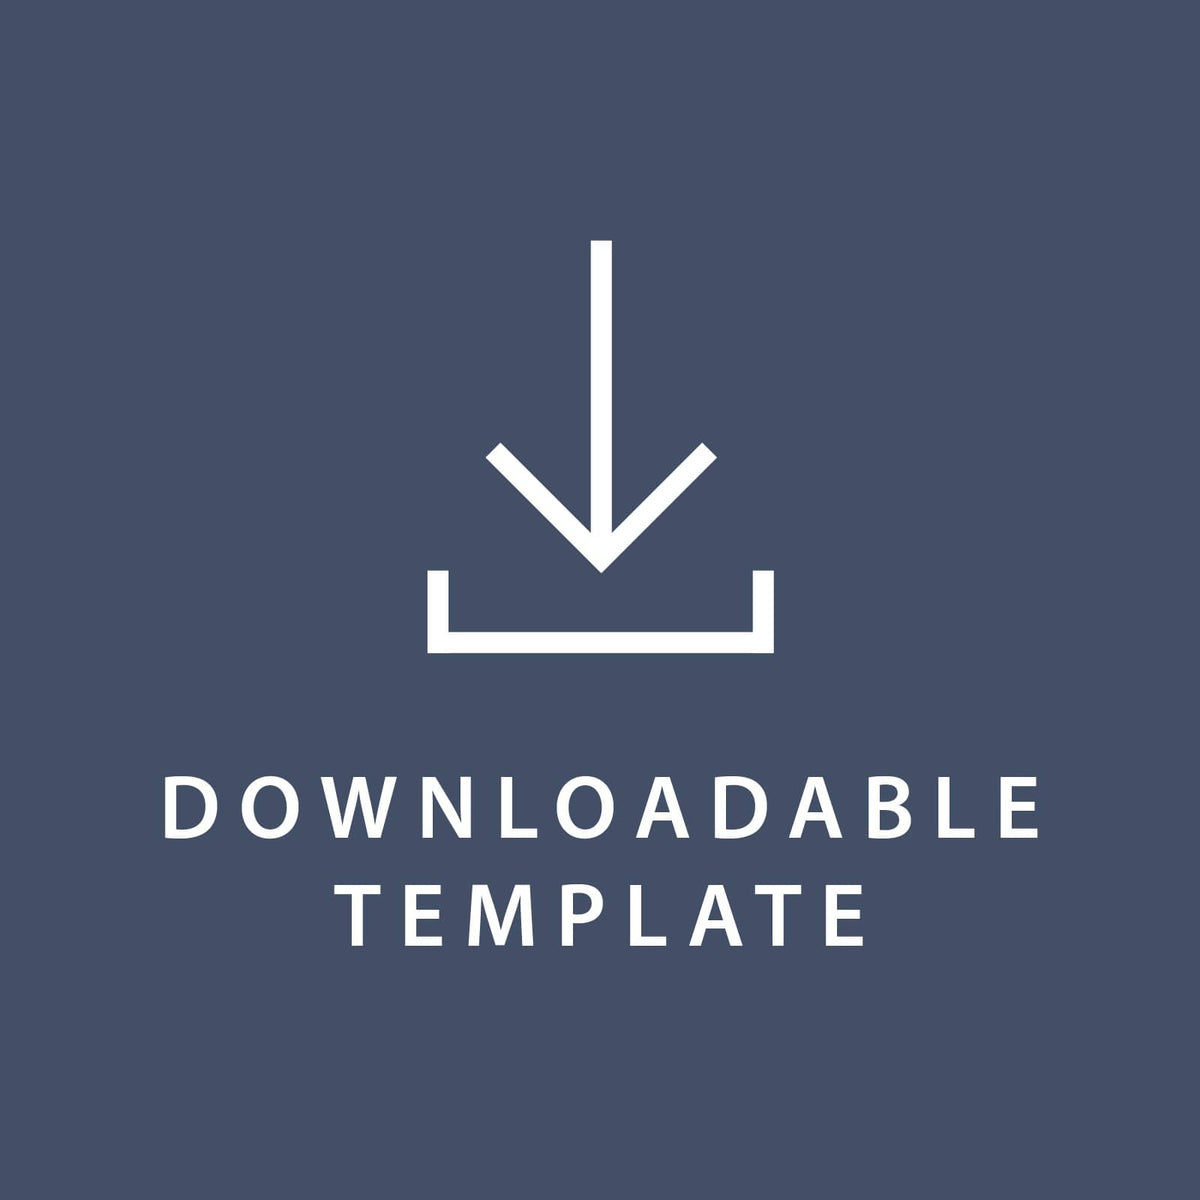 Template for 8.5 x 11 Labels Gartner Studios Template tmplt0033